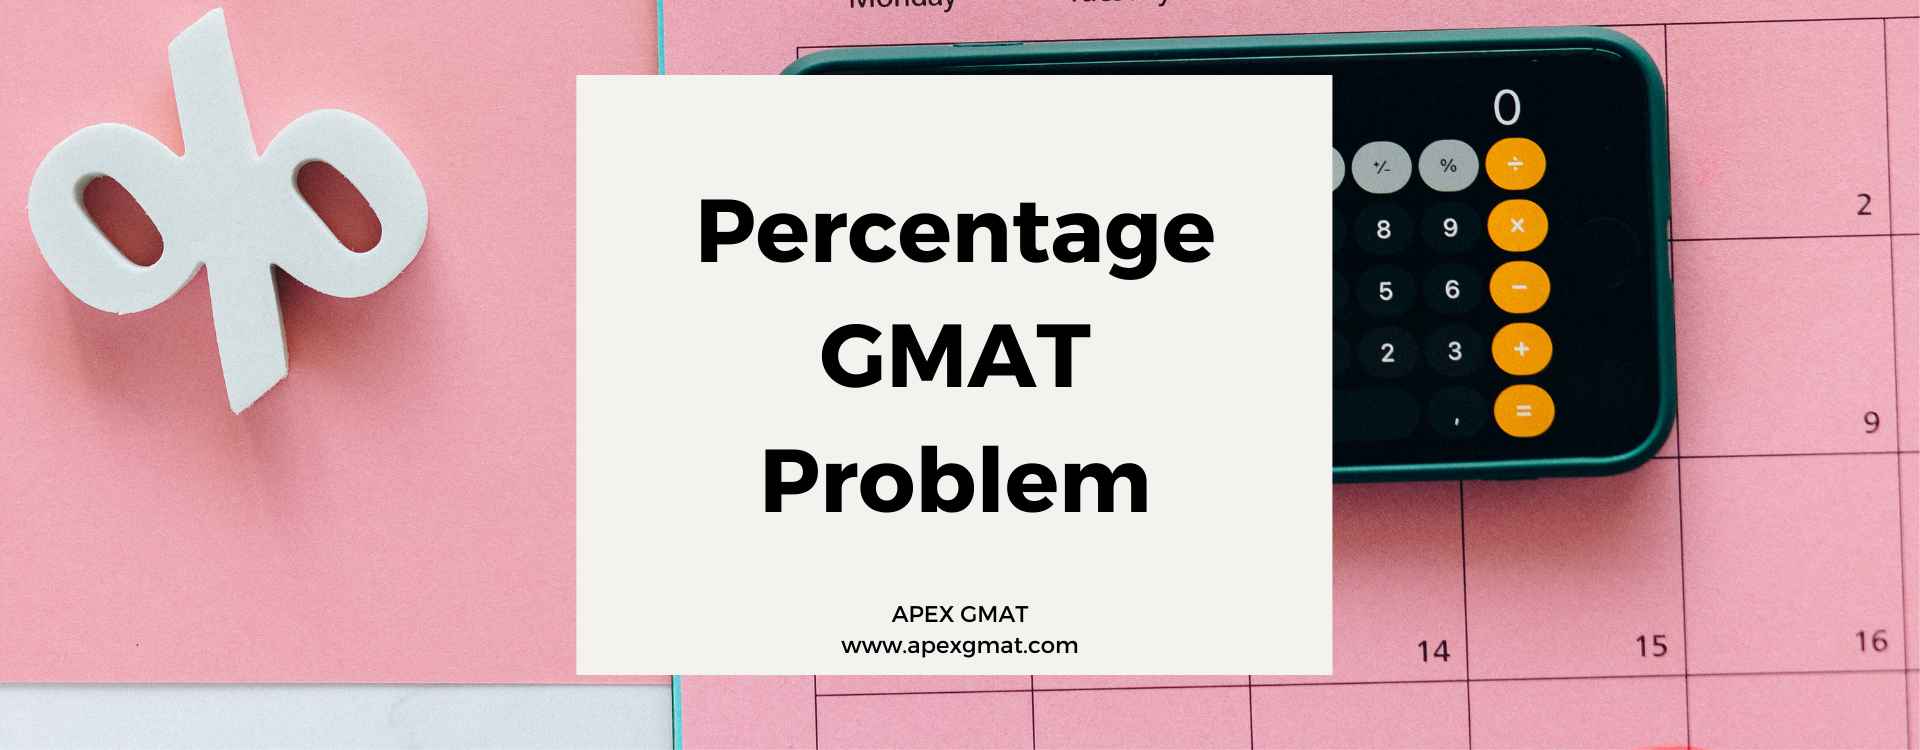 Percentage GMAT Problem